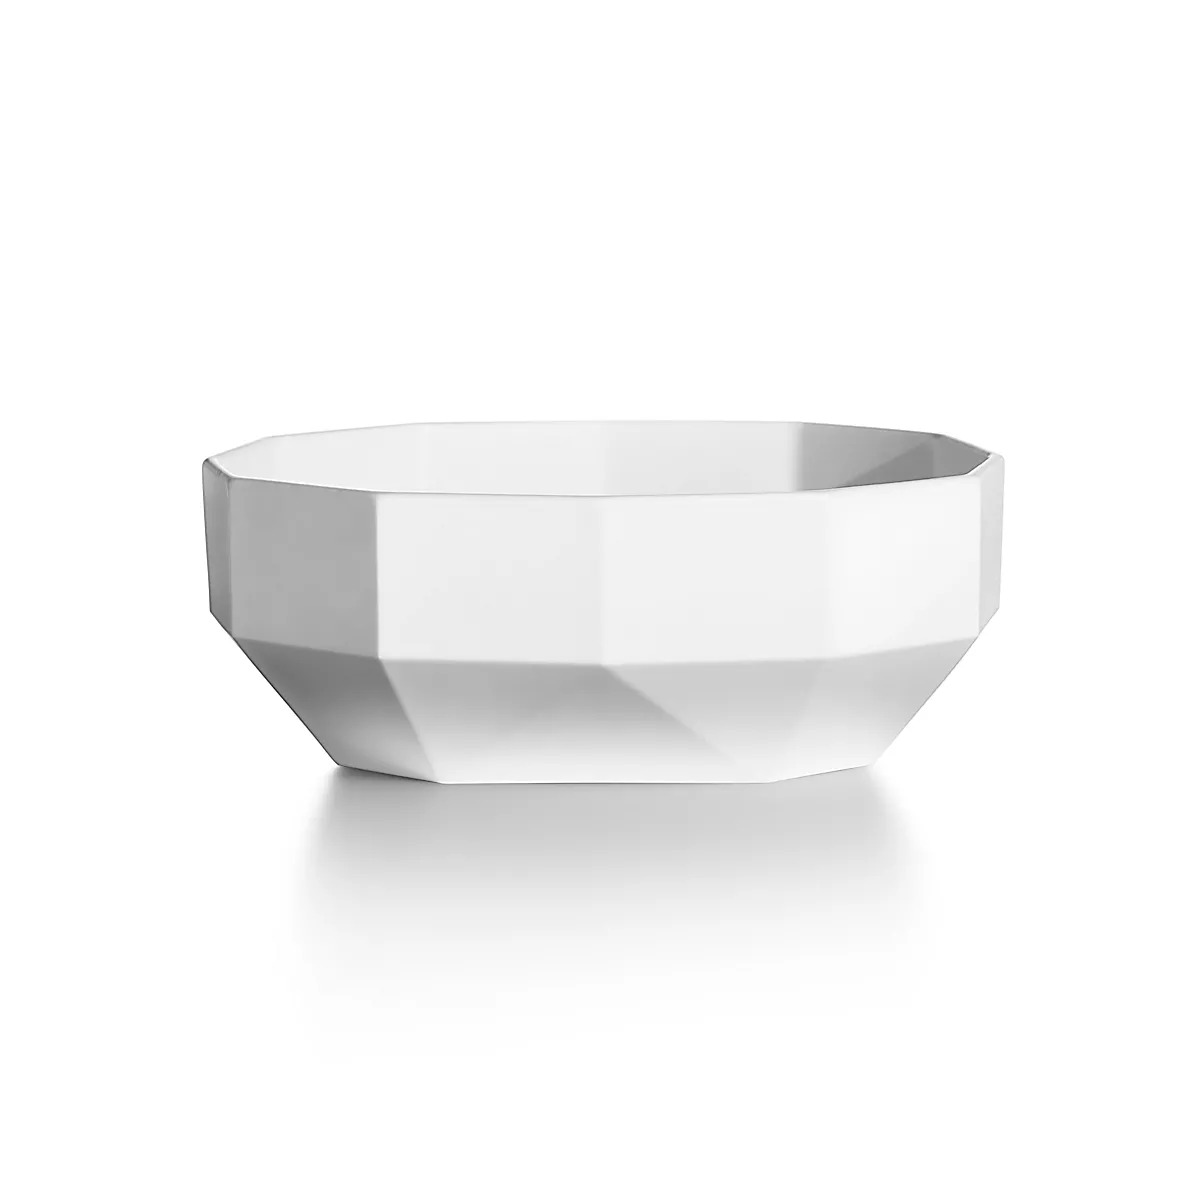 No Designer Bowl Decorative Bone One Scale